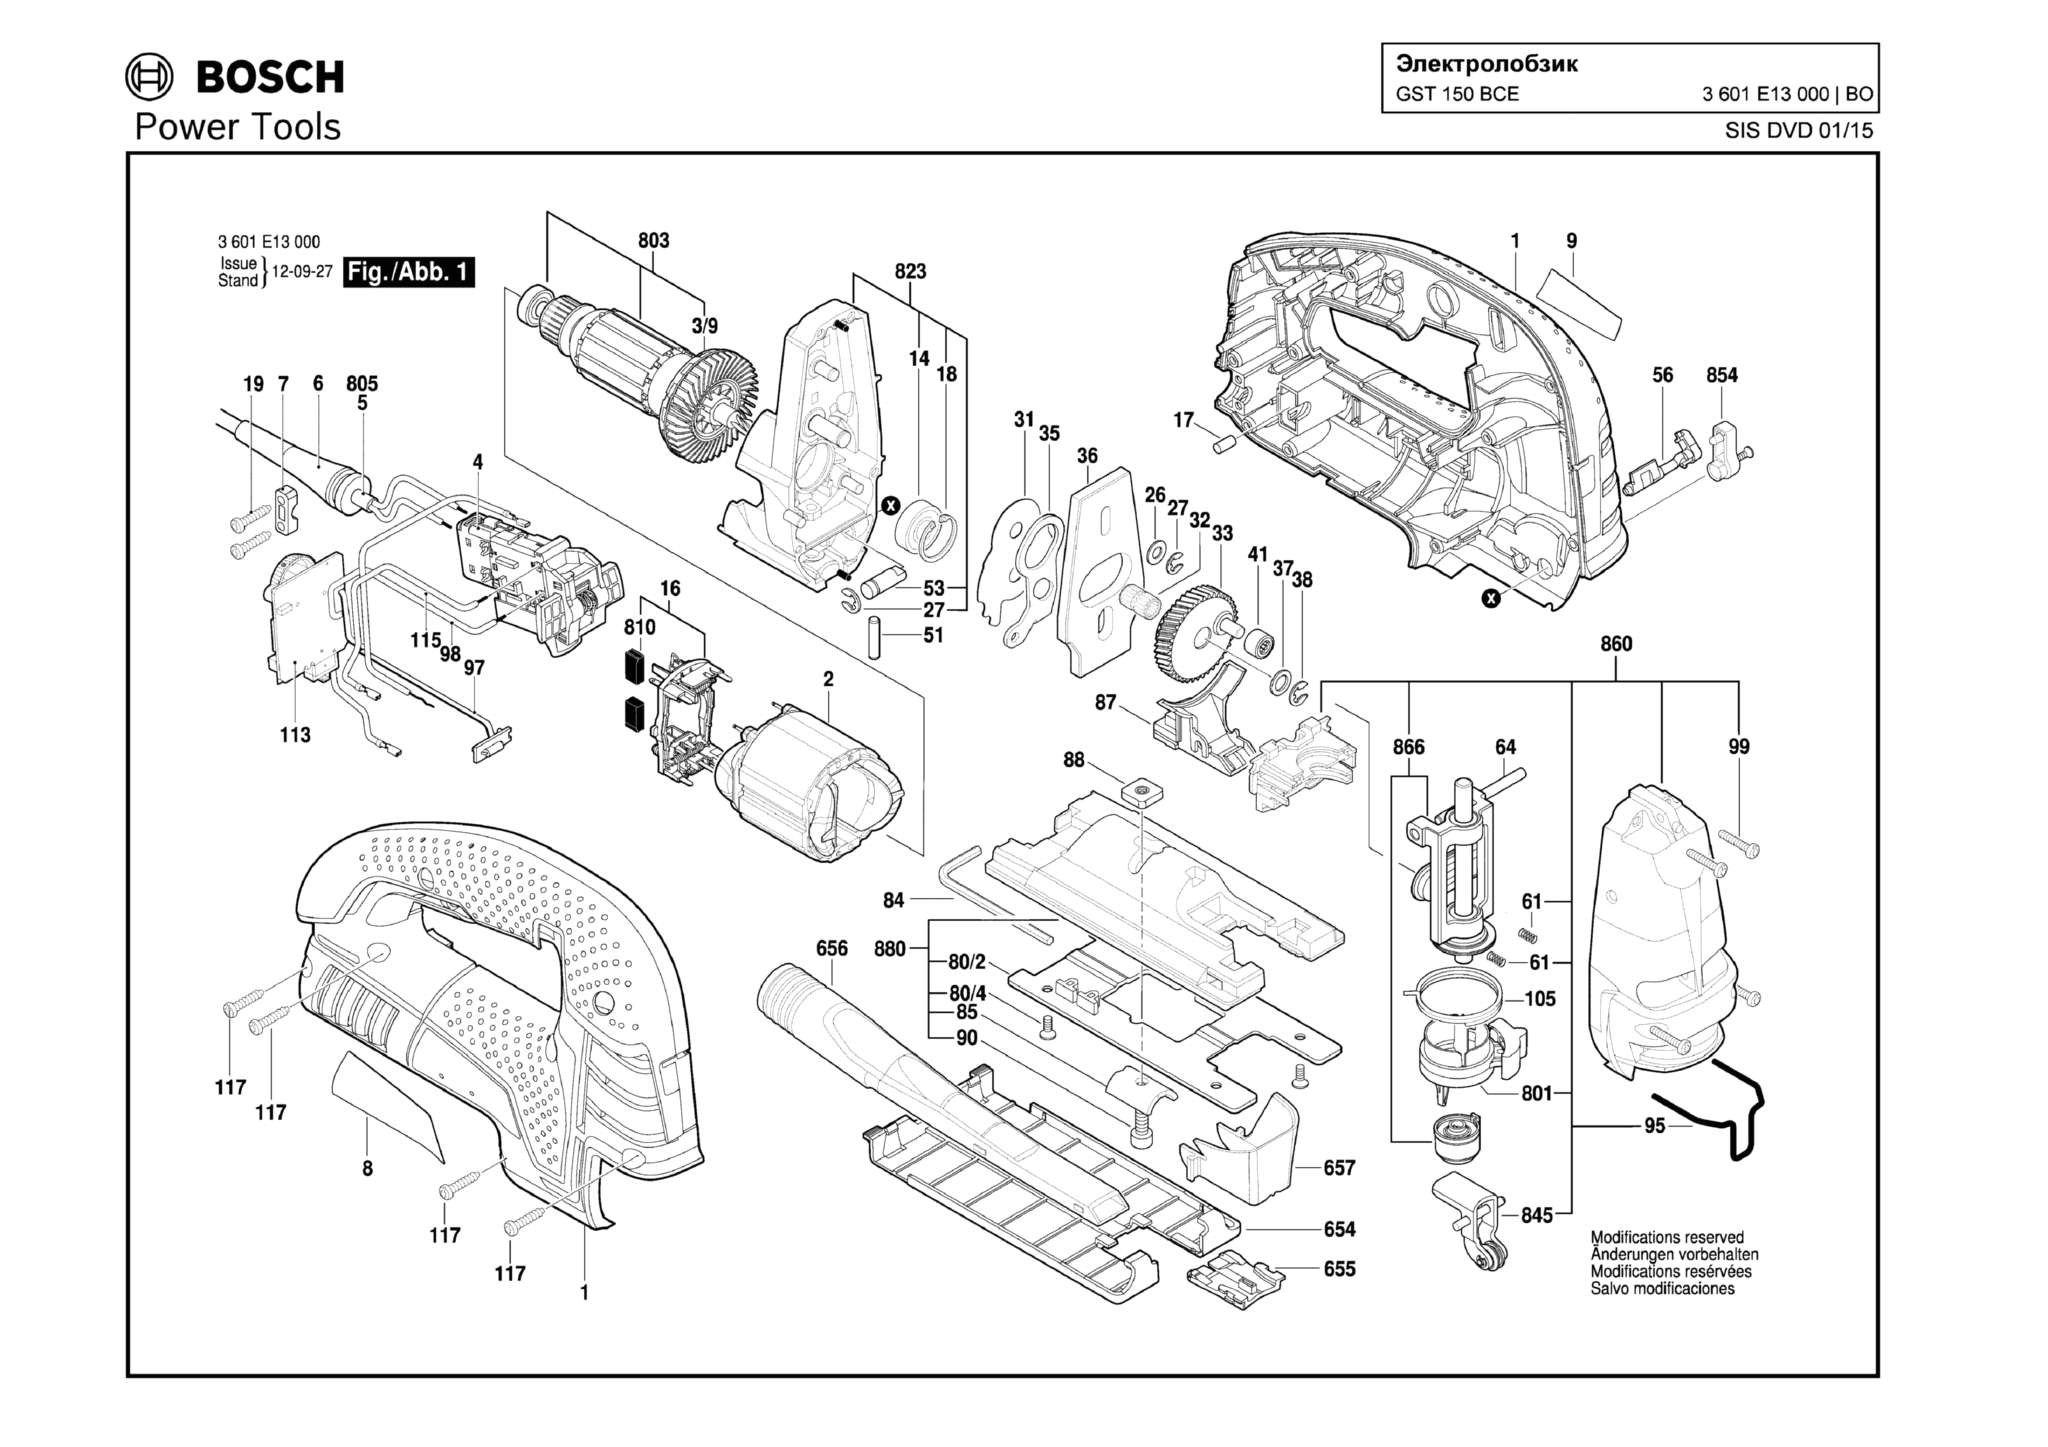 Запчасти, схема и деталировка Bosch GST 150 BCE (ТИП 3601E13000)